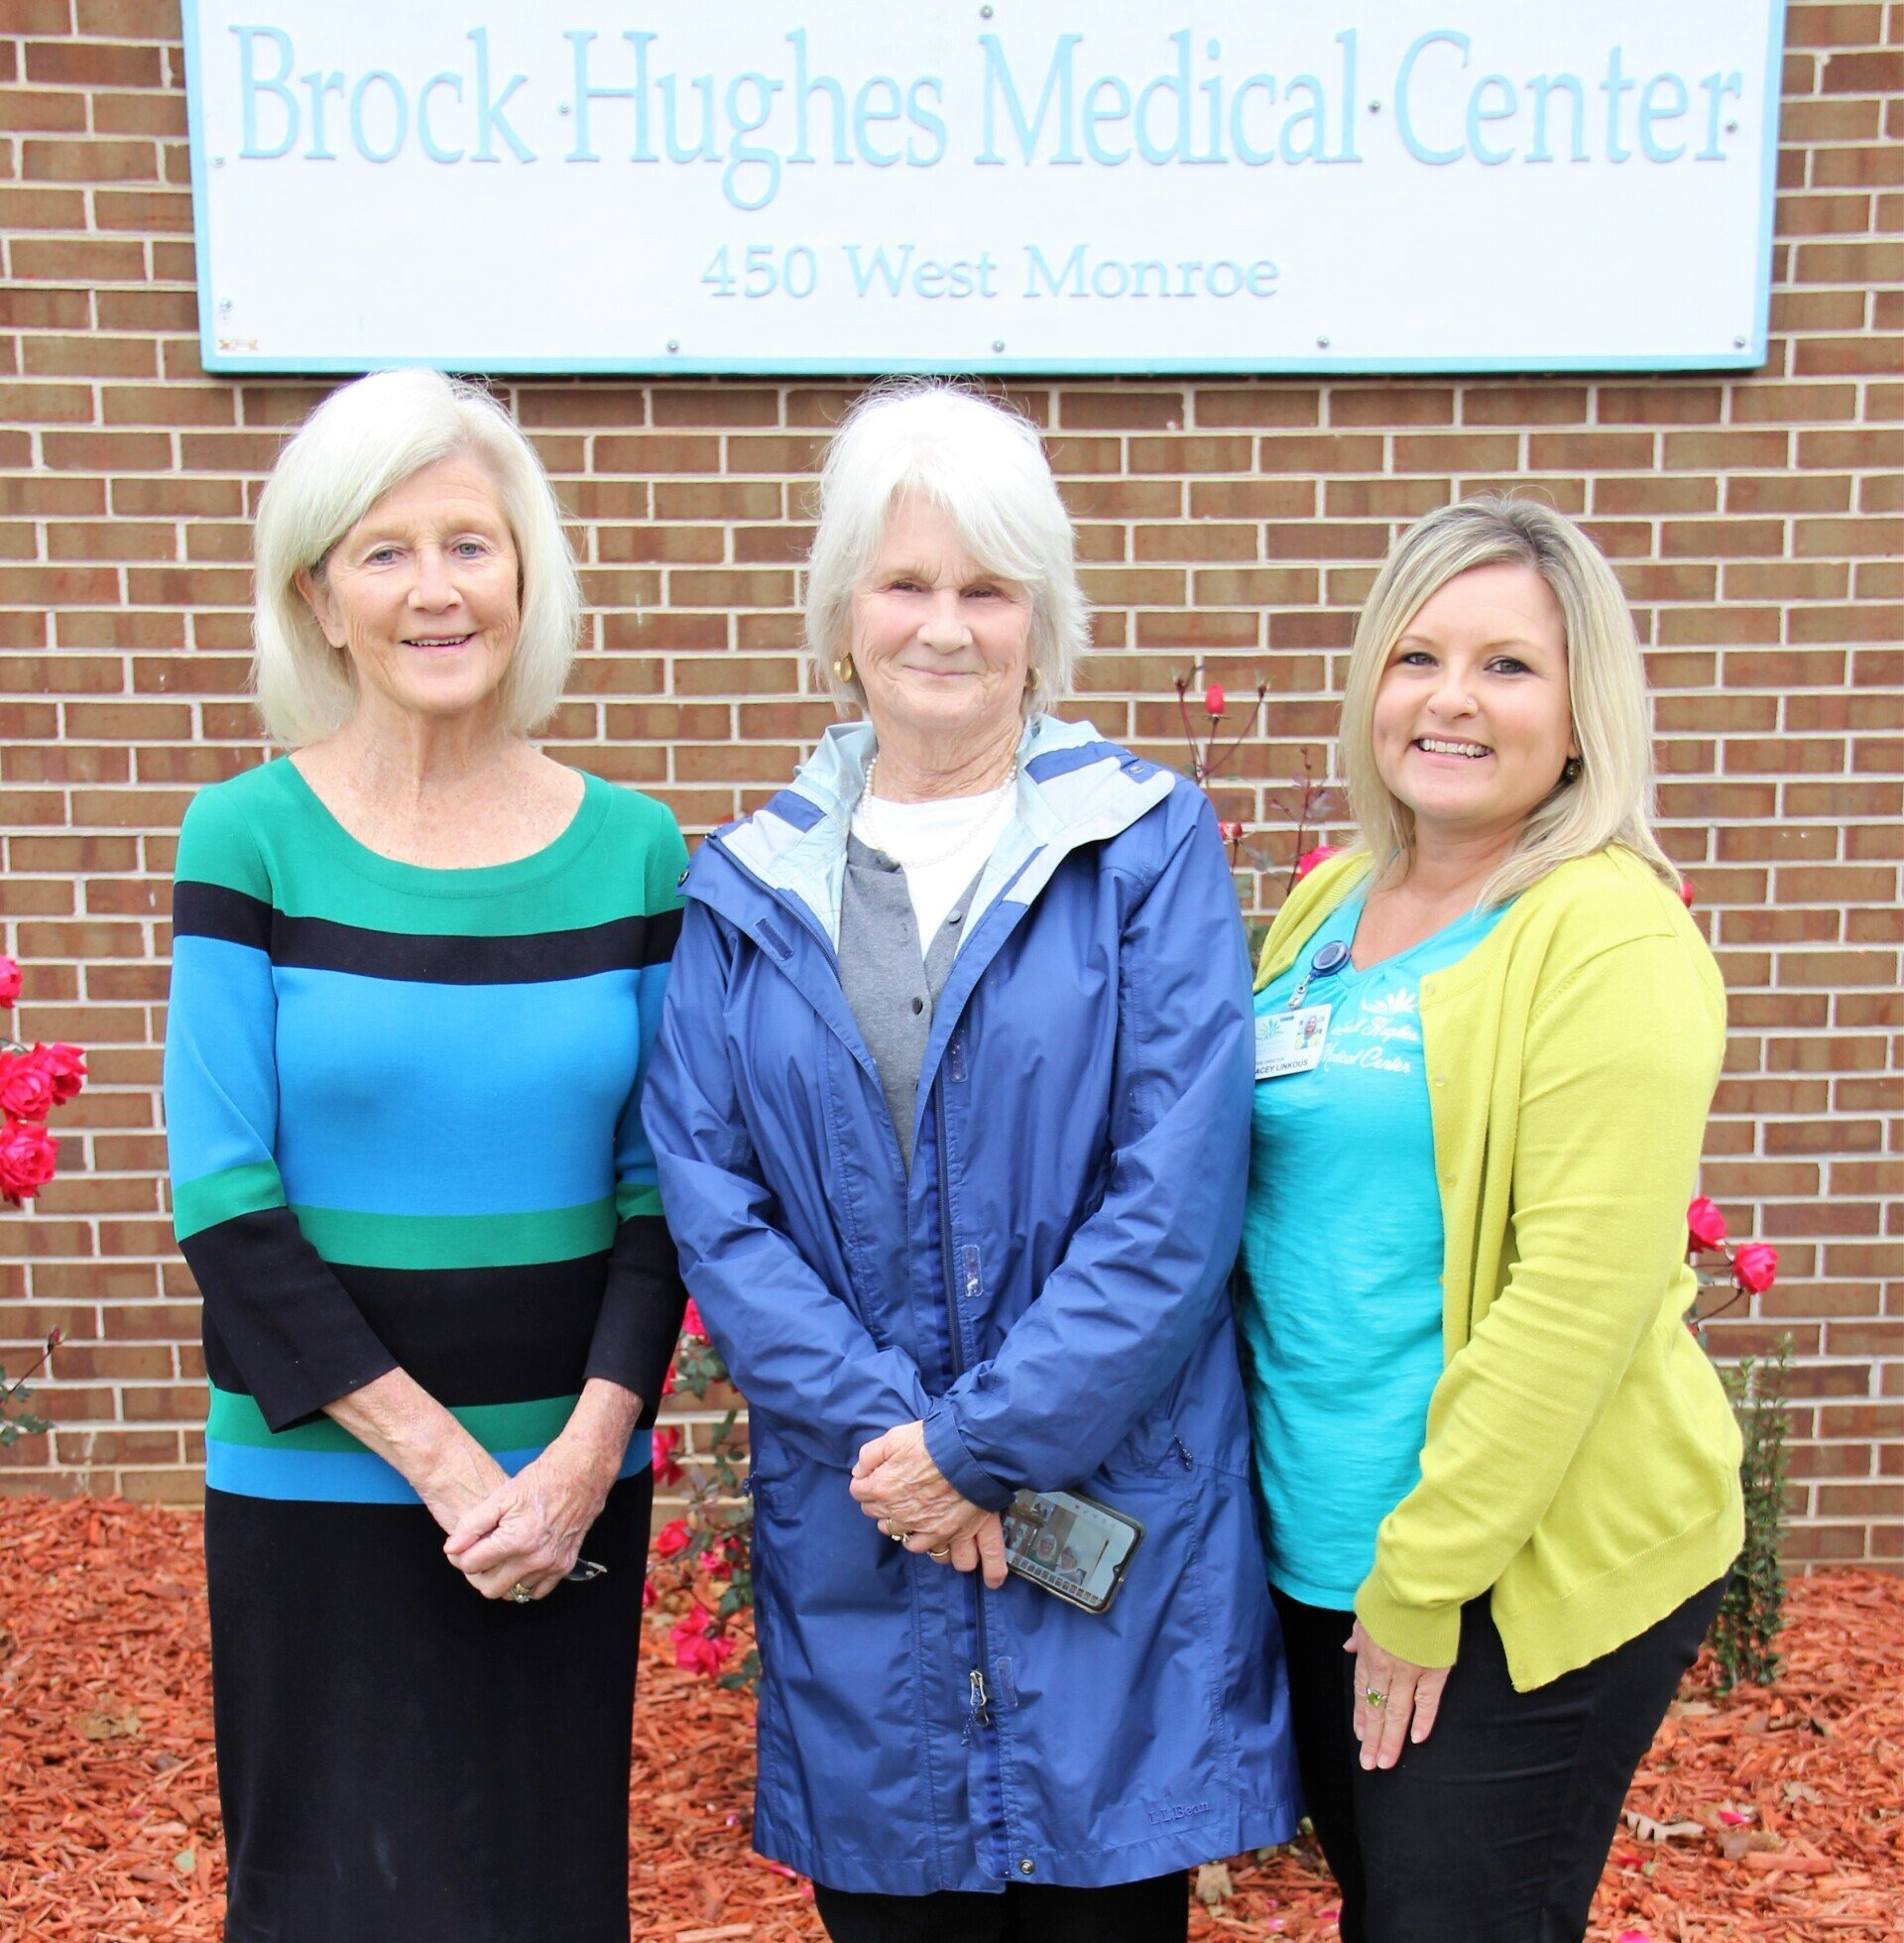 Daughters of Dr. Brock Hughes